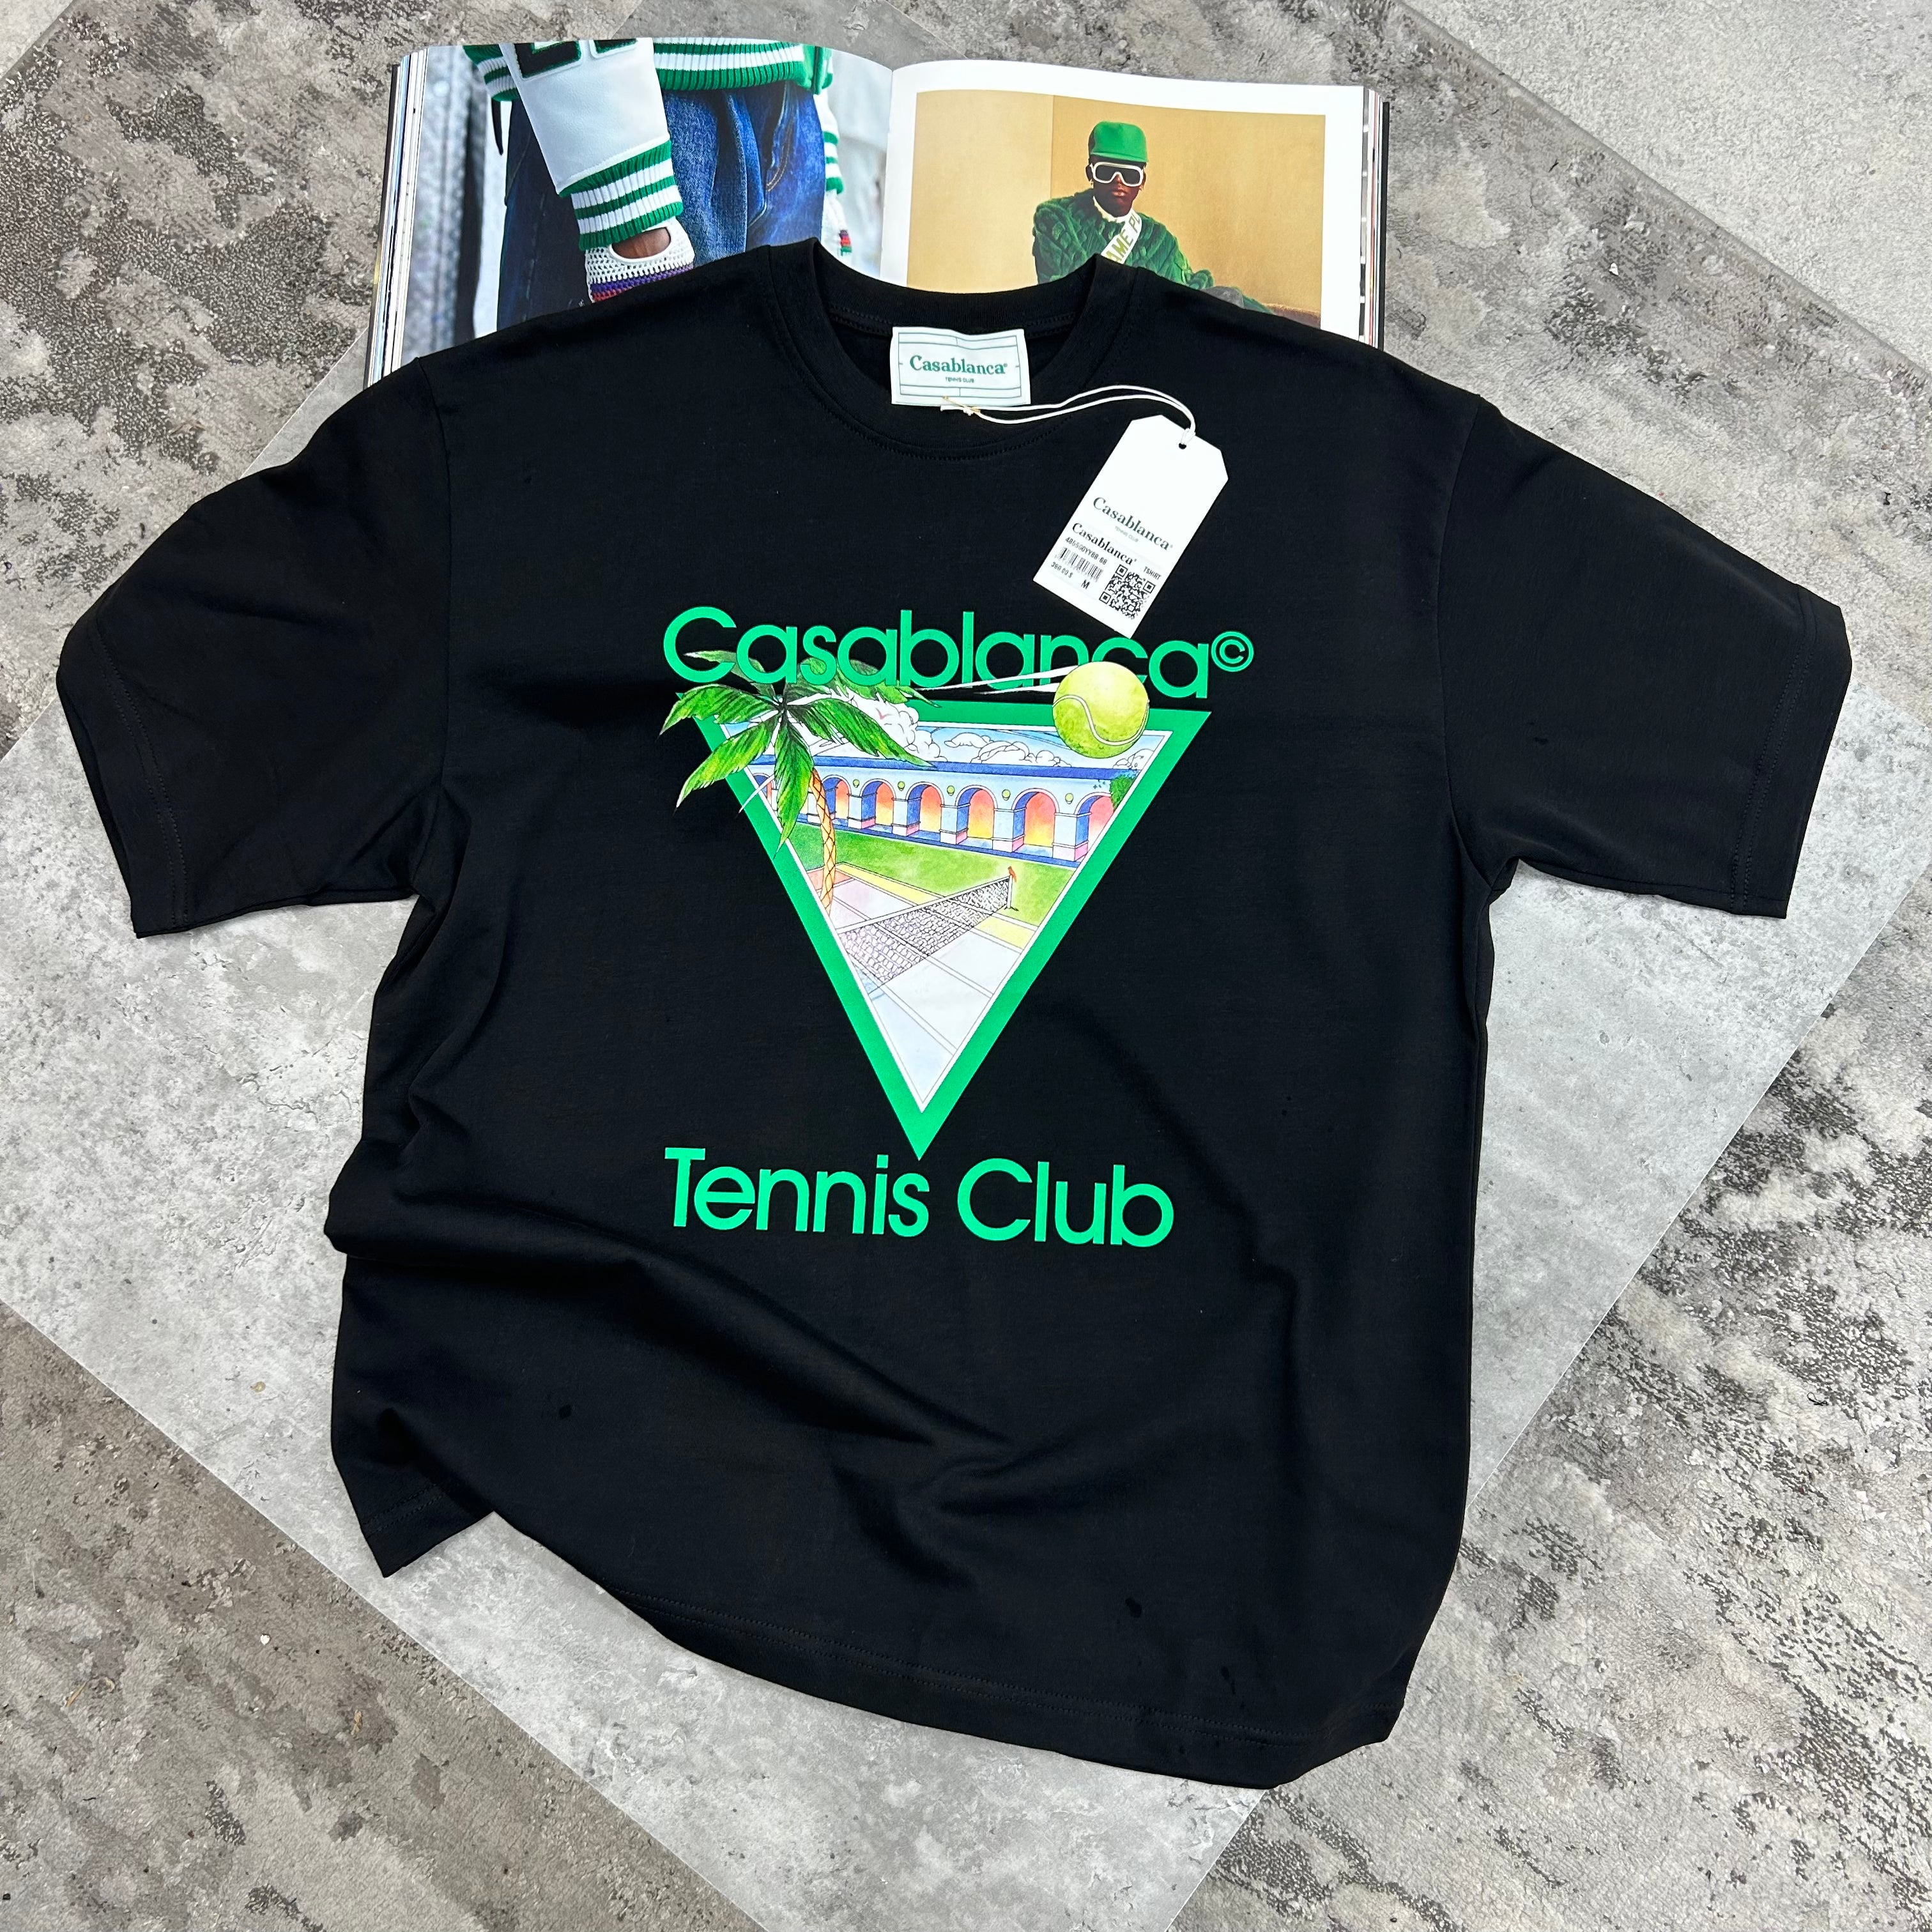 CASABLANCA - TENNIS CLUB T-SHIRT - BLACK/GREEN